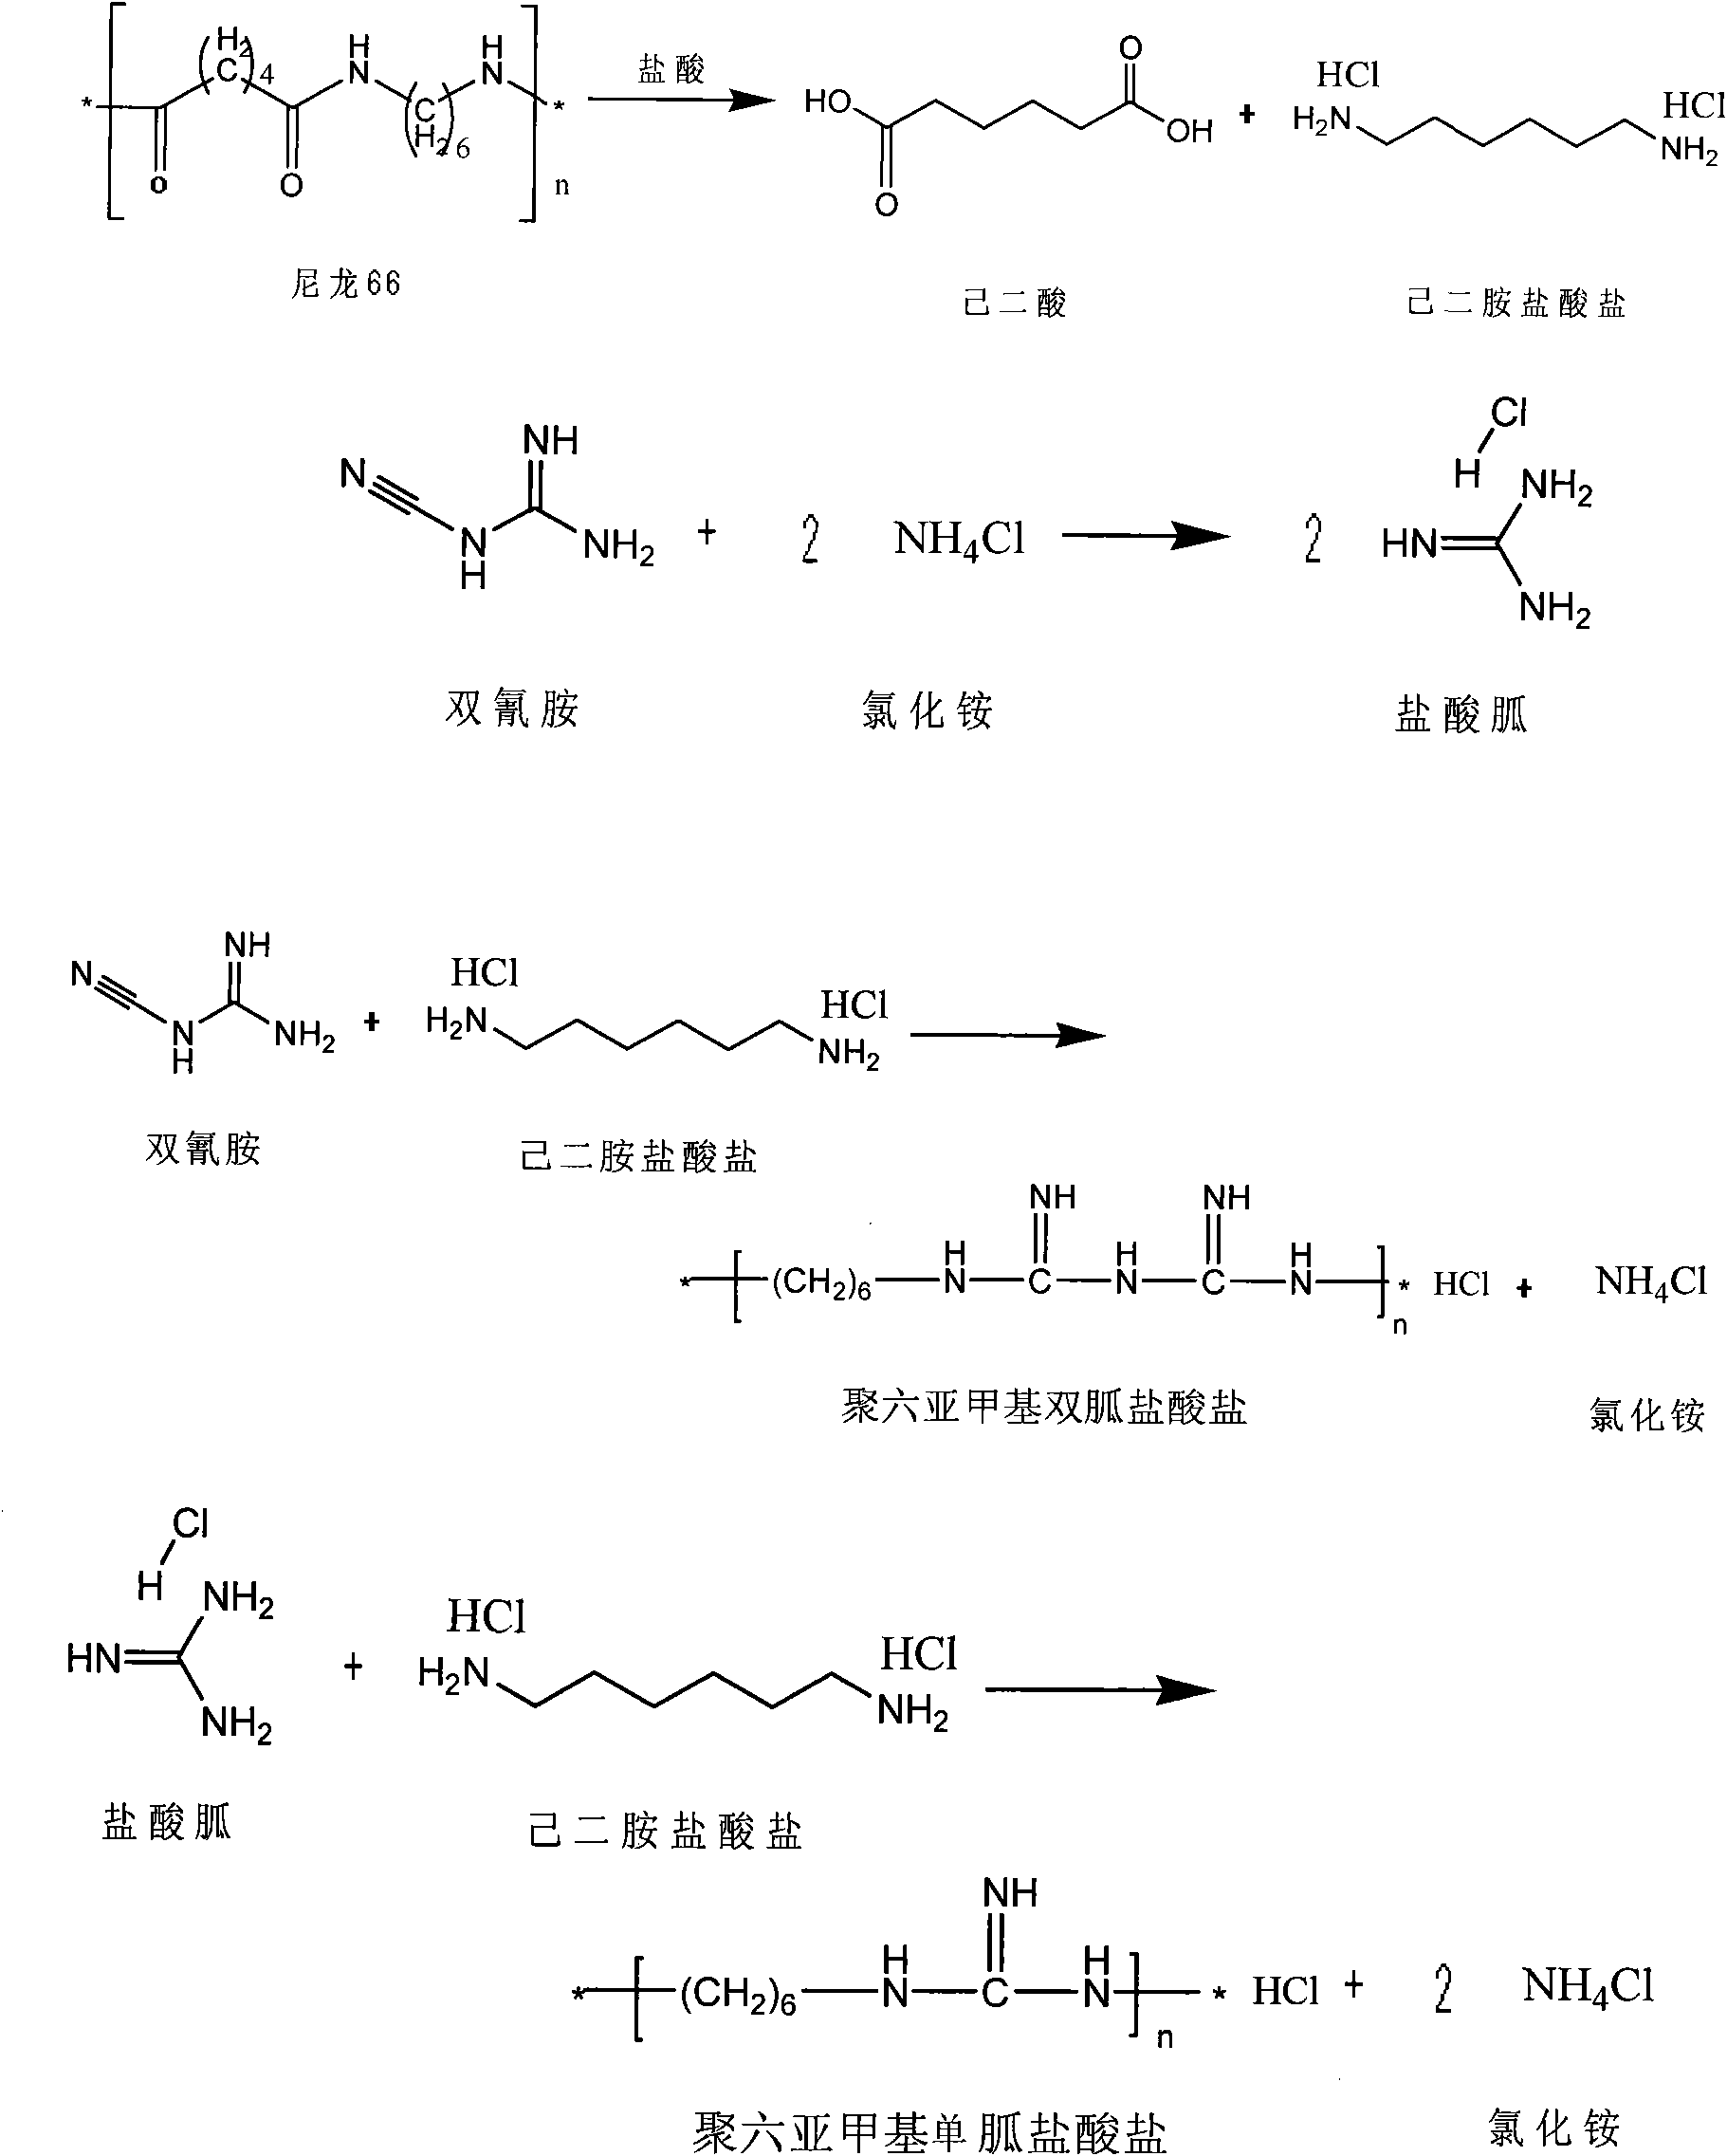 Method for producing adipic acid, hexamethylenediamine hydrochloride and polyhexamethylene (di)guanidine chloride from nylon-66 through depolymerization